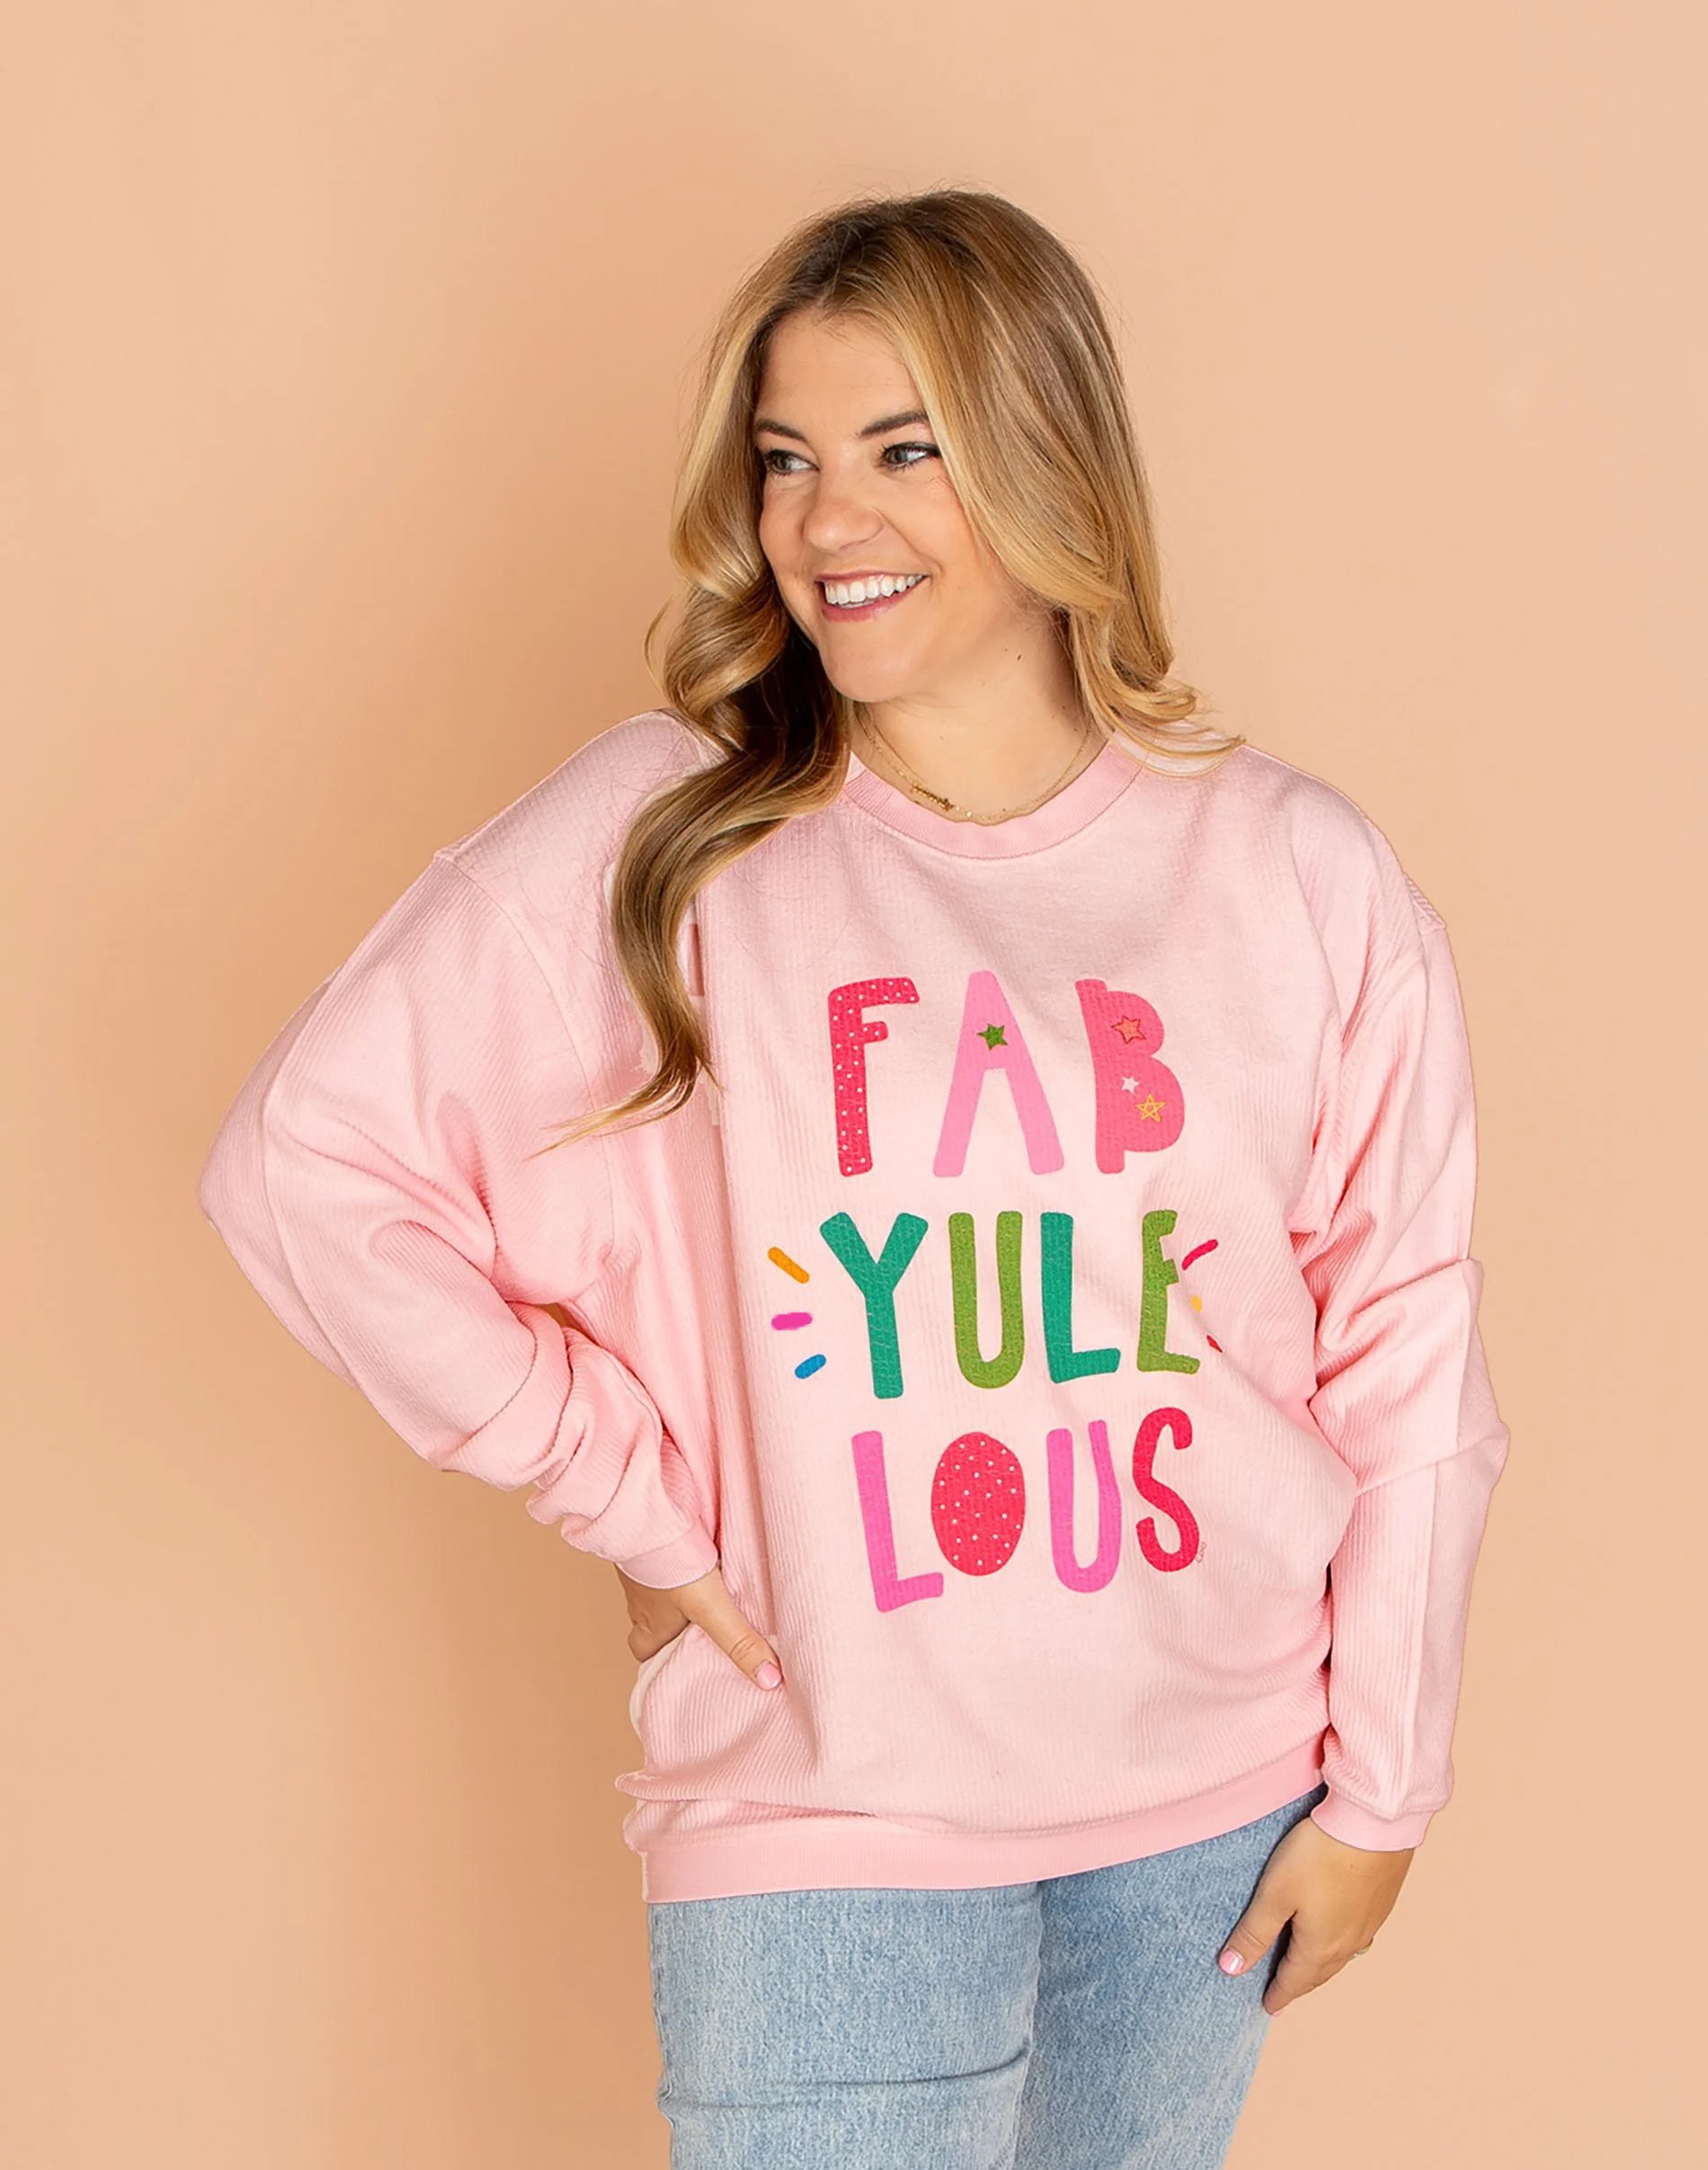 Fab-YULE-Lous - Callie Corded Sweatshirt - - Callie Danielle Shop